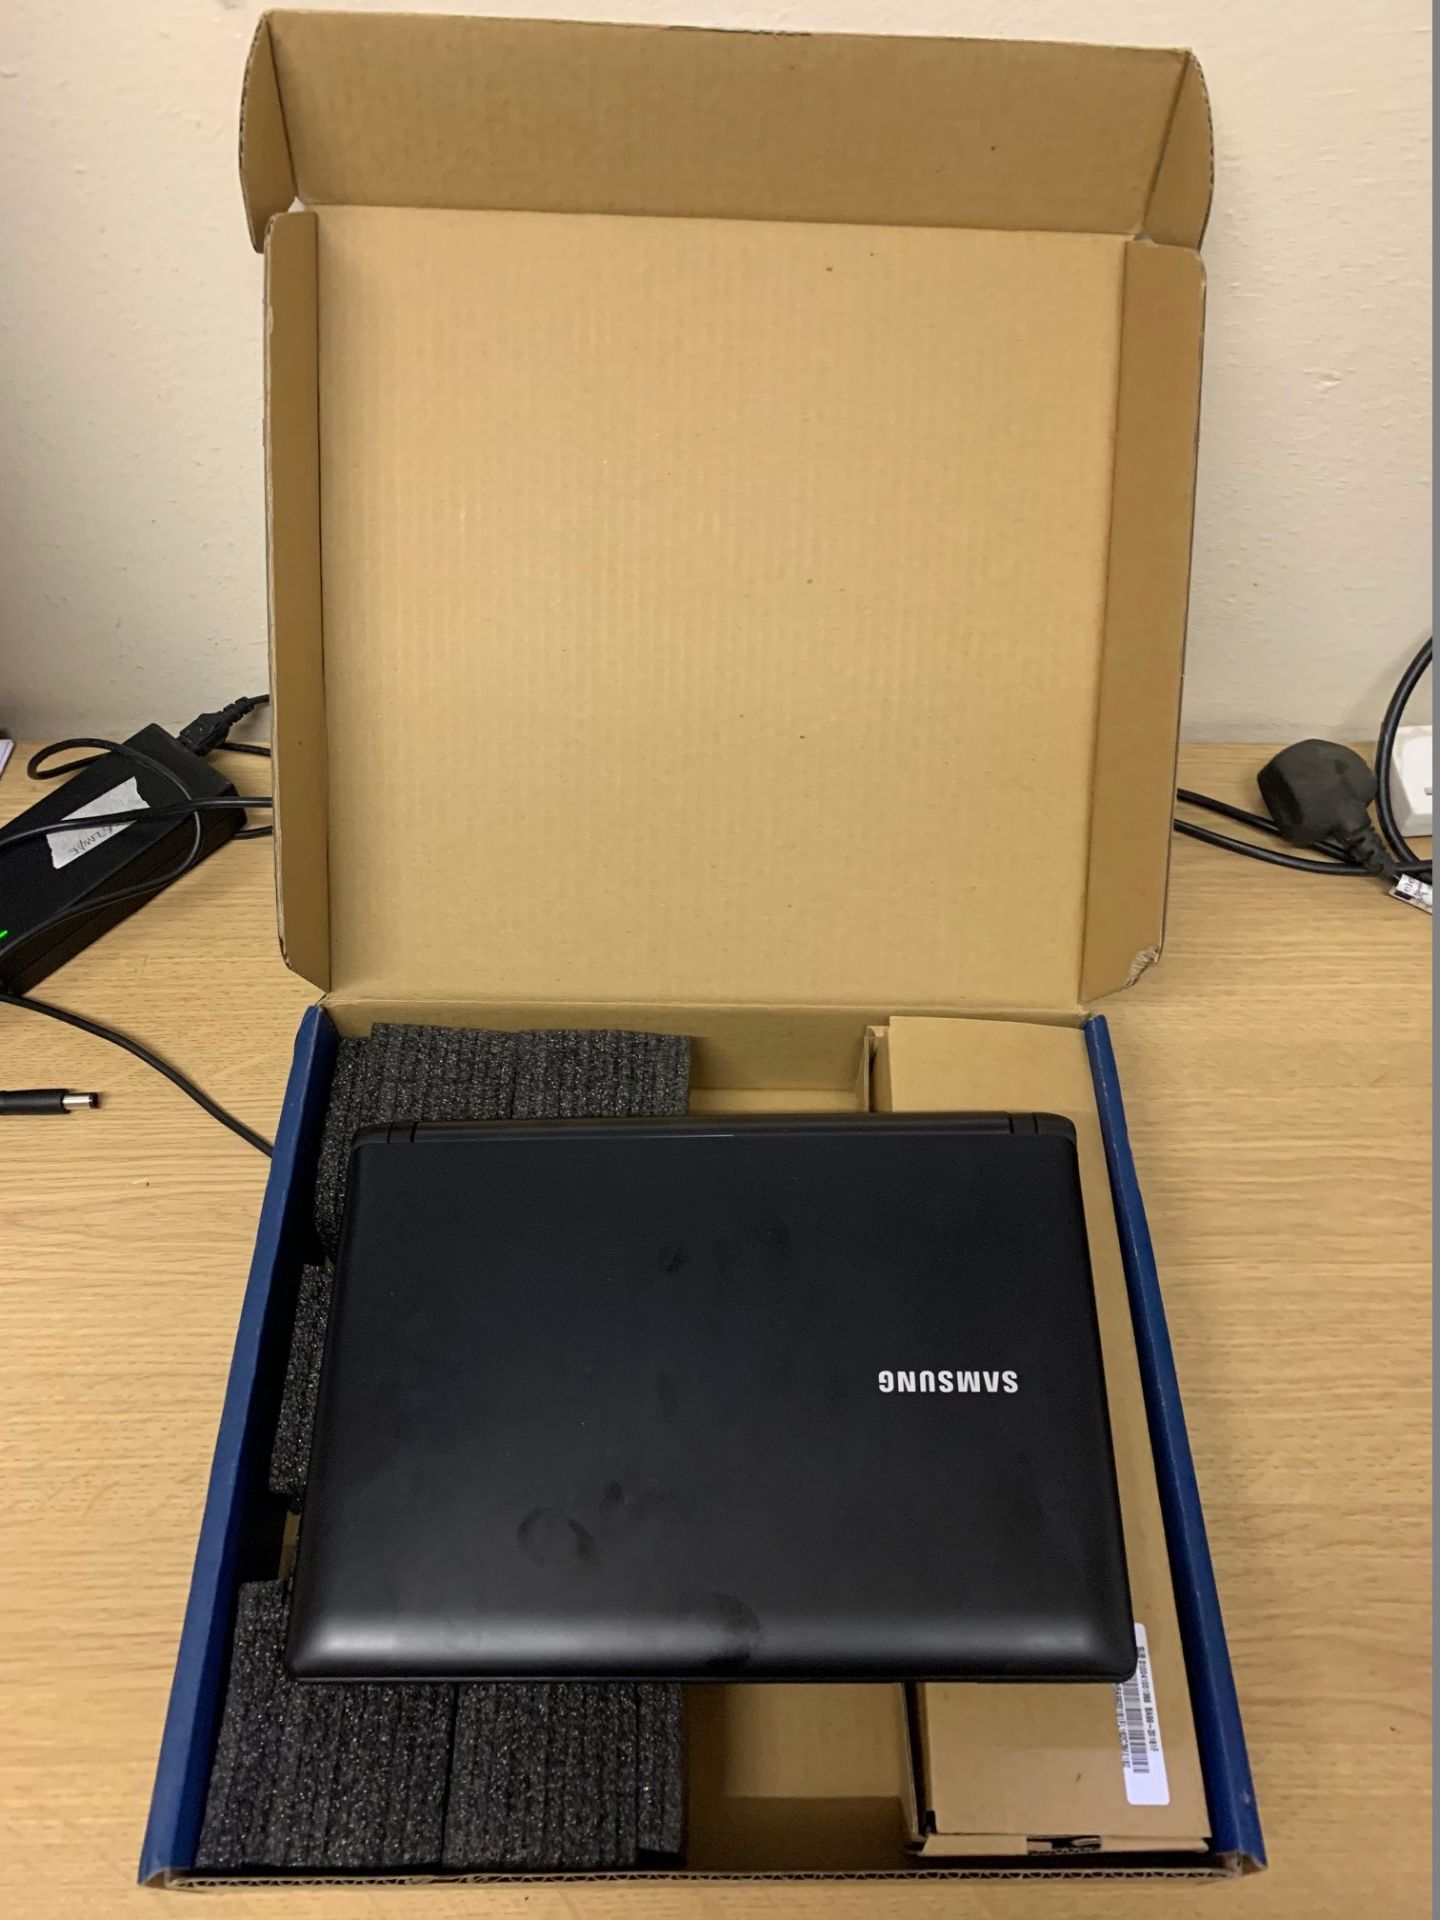 Samsung N102S-B01 Notebook - 320GB Hard Drive, 1GB RAM, Windows 7, Box & Charger - Image 3 of 6